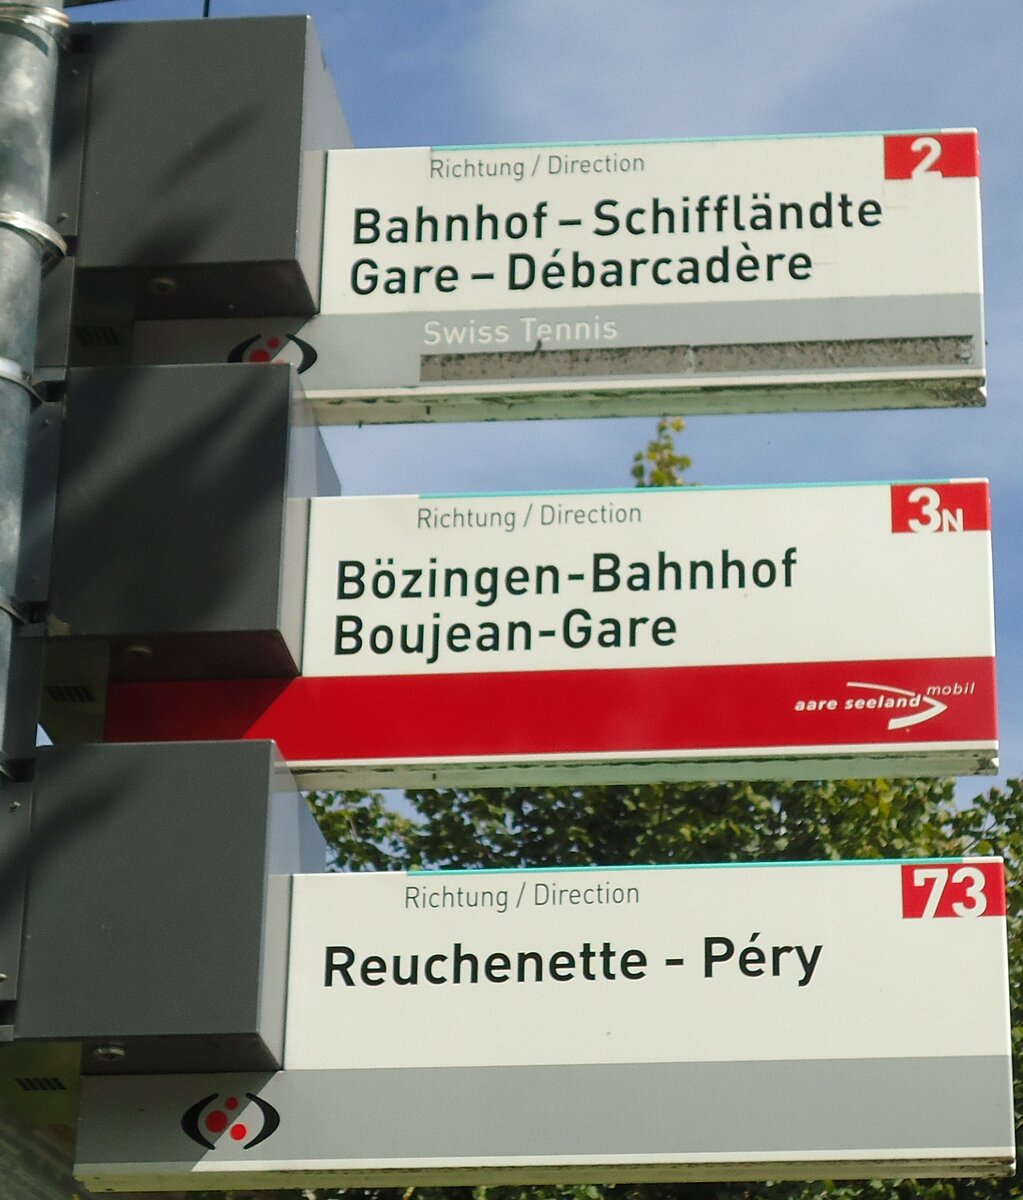 (129'632) - VB/aare seeland mobil-Haltestellenschilder - Biel, Swiss Tennis - am 12. September 2010